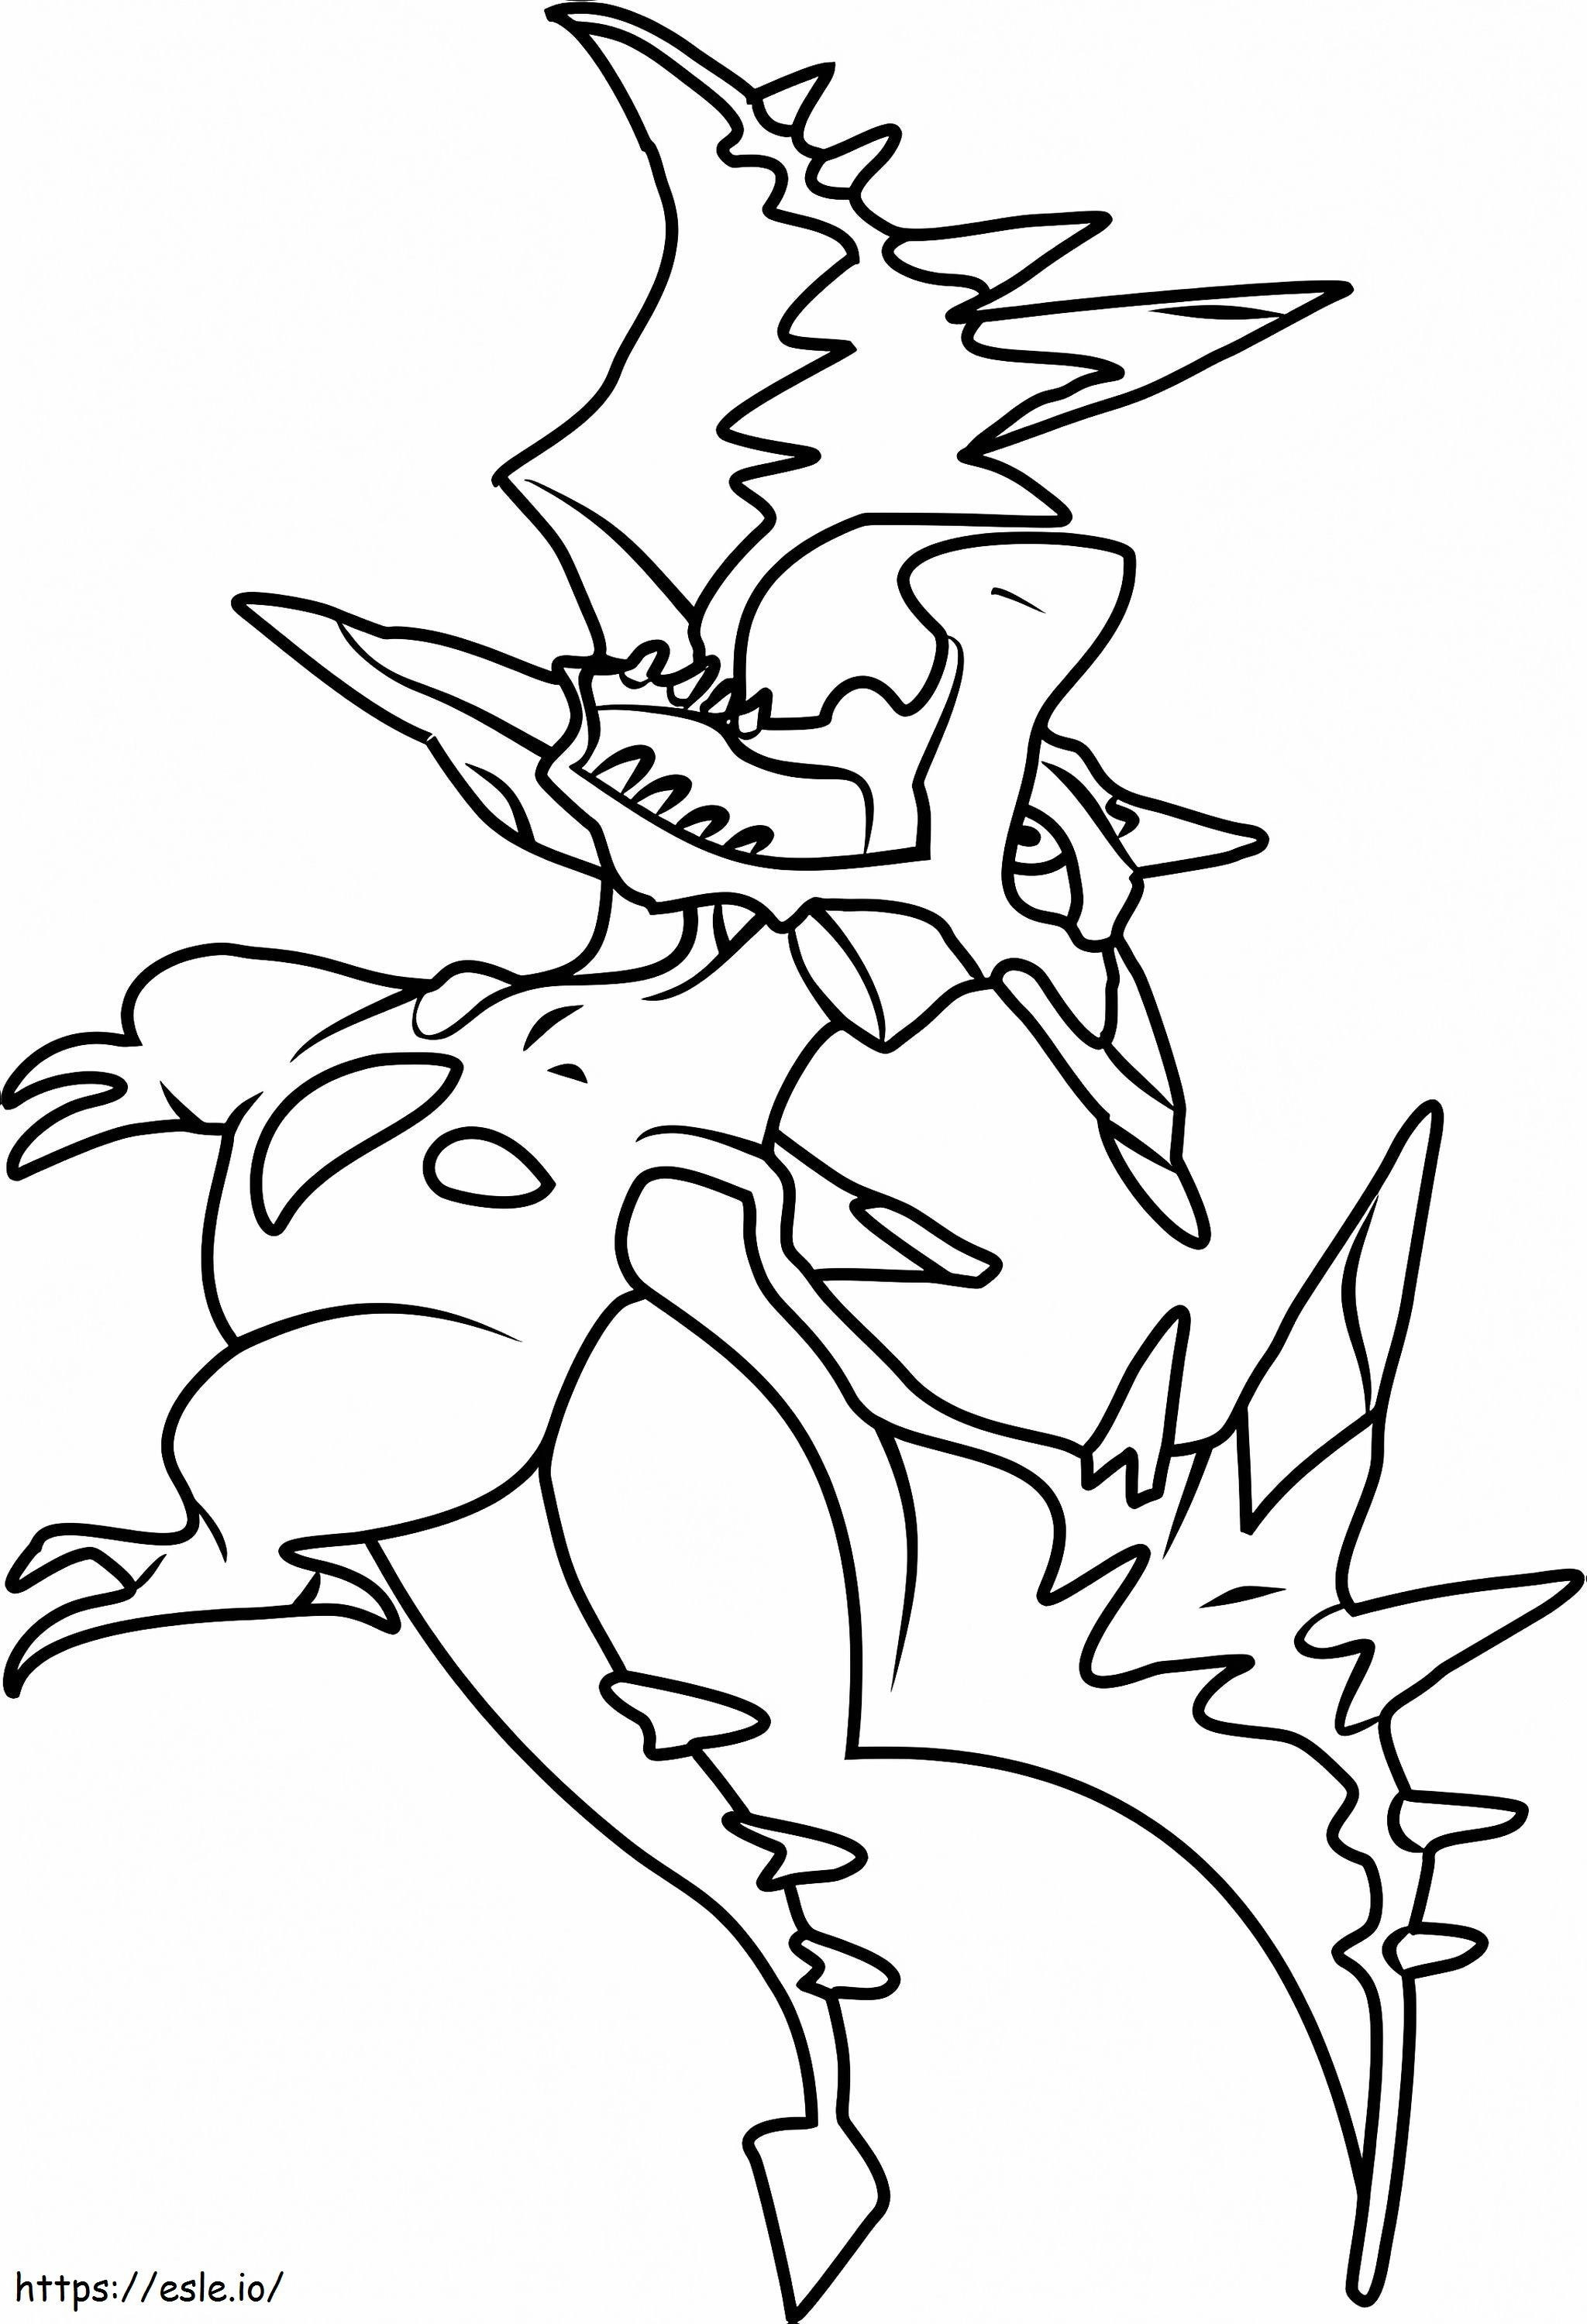 Mega Aerodactyl Pokemon A4 coloring page